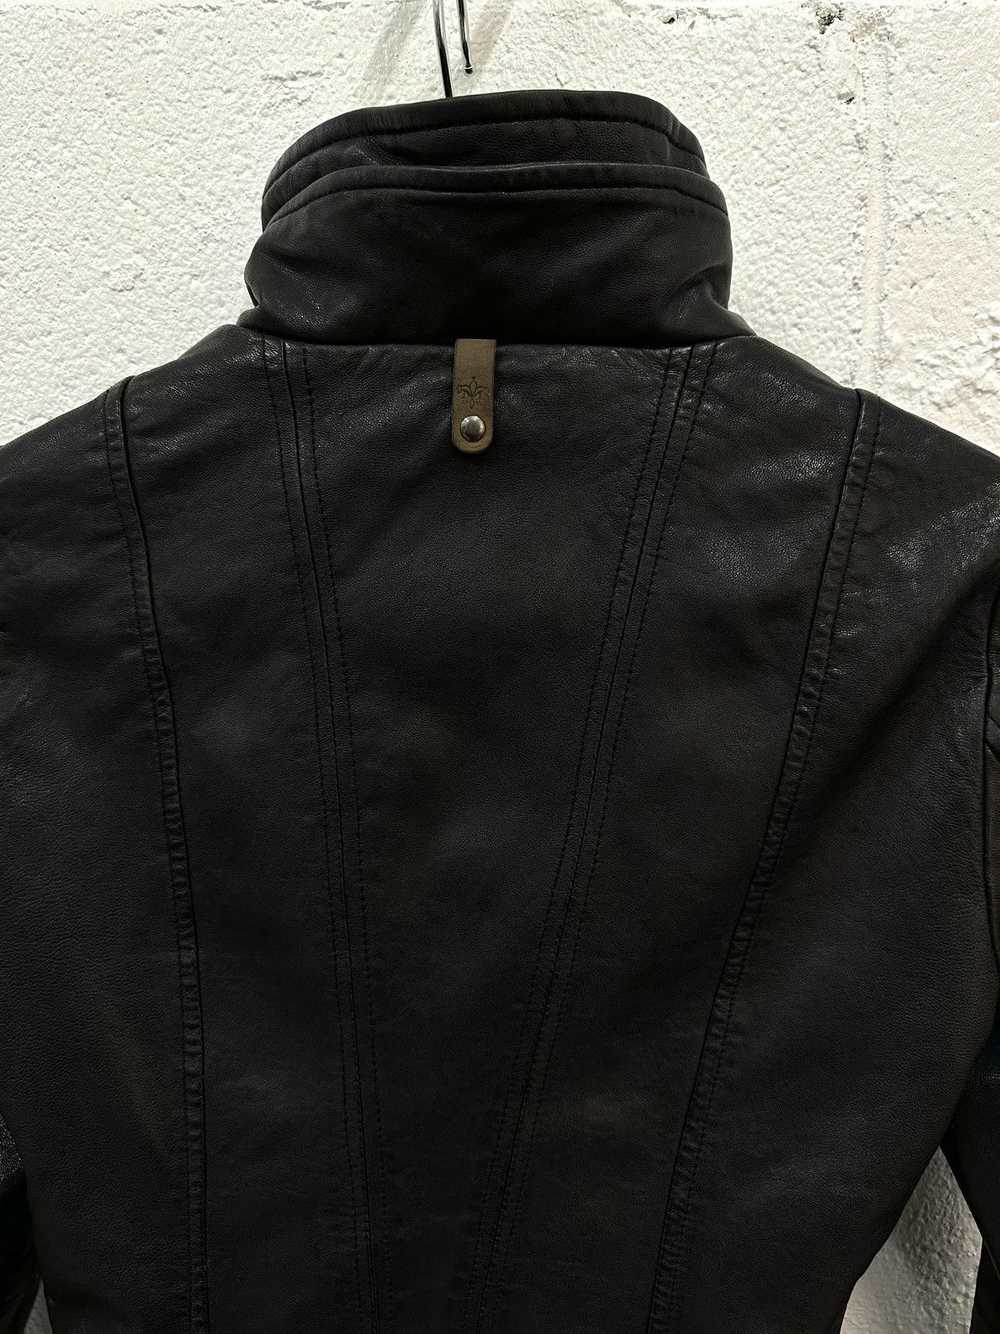 Mackage Mackage Leather Biker jacket - image 6